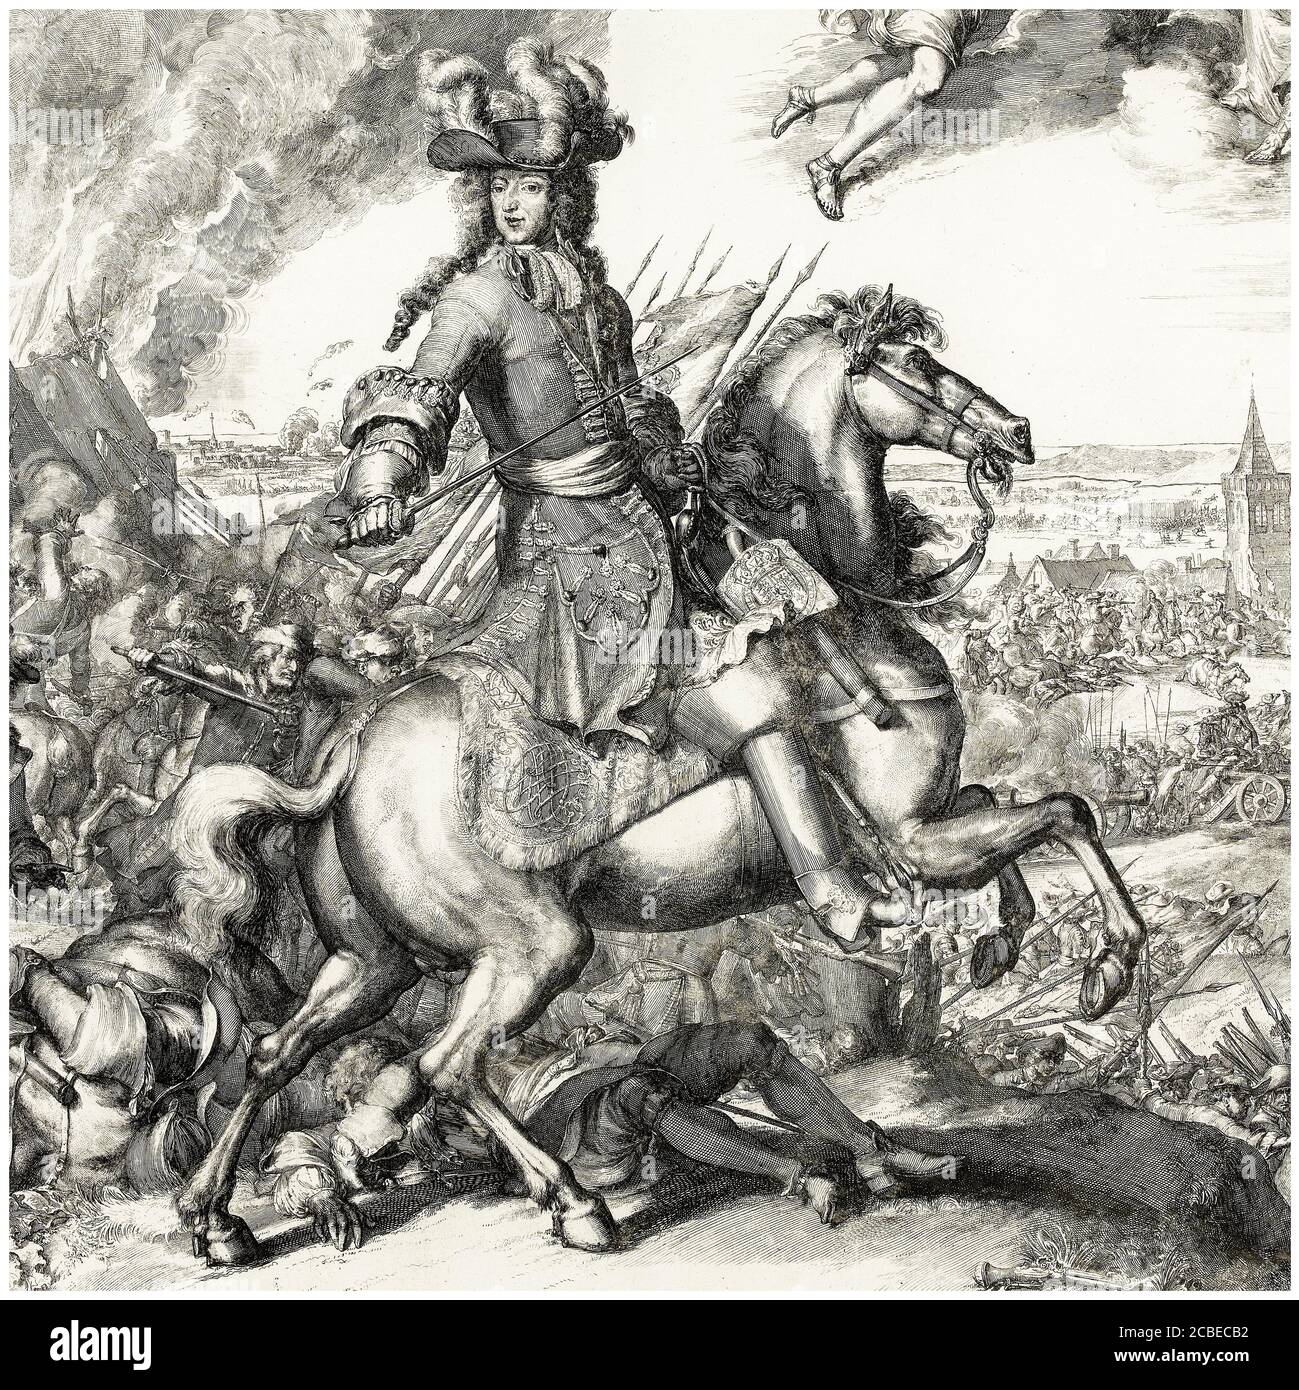 King William III at the Battle of the Boyne, Ireland in 1690, print by Romeyn de Hooghe, 1691 Stock Photo